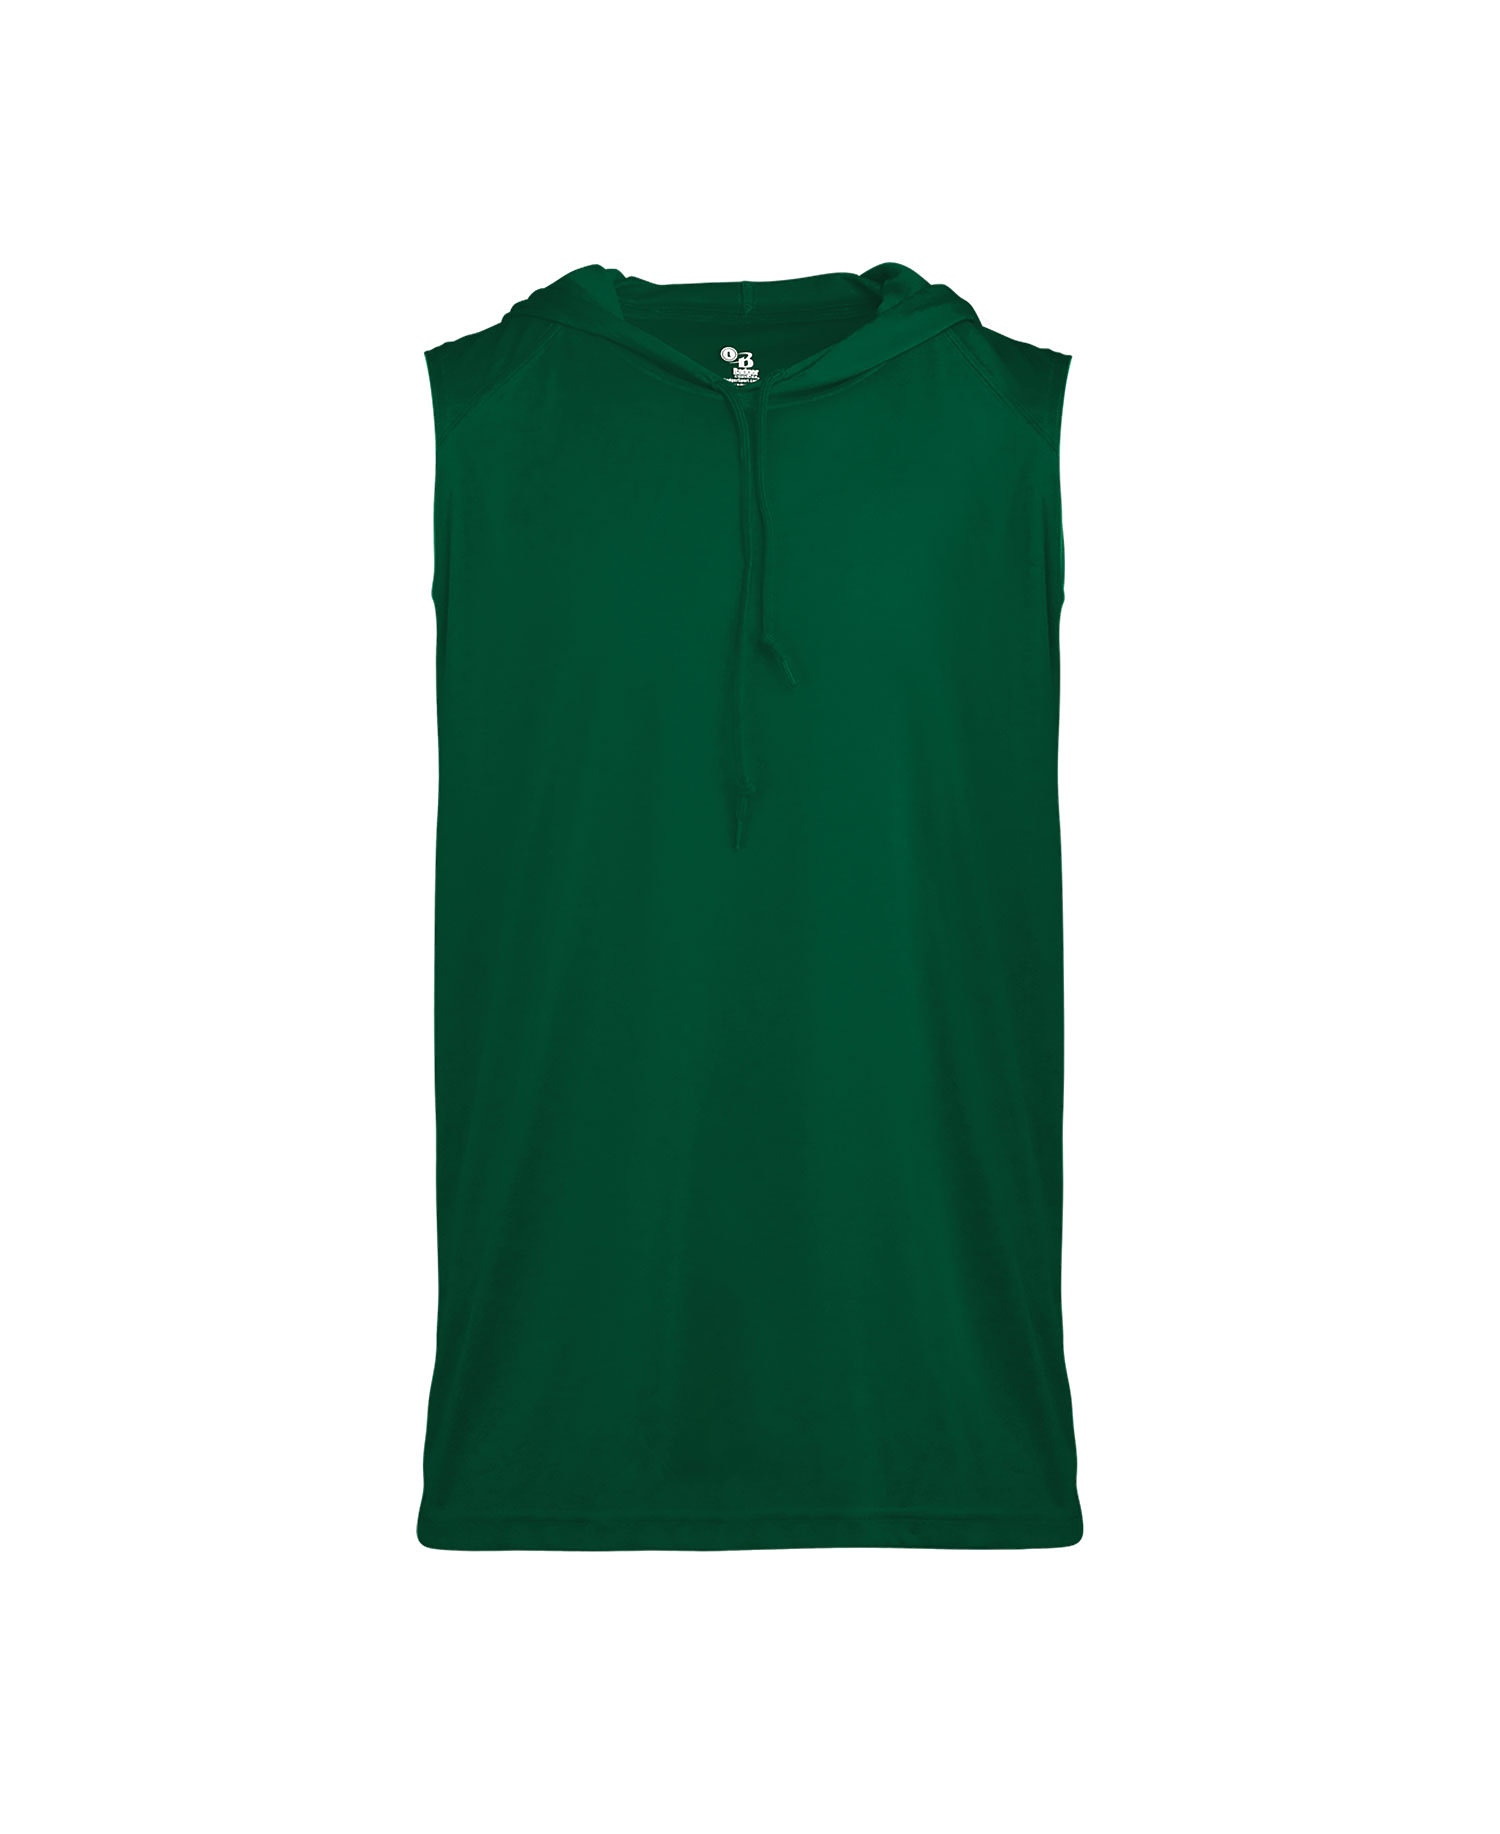 Badger Sport 4108 - Adult B-Core Sleeveless Hood Tee $13.89 - T-Shirts